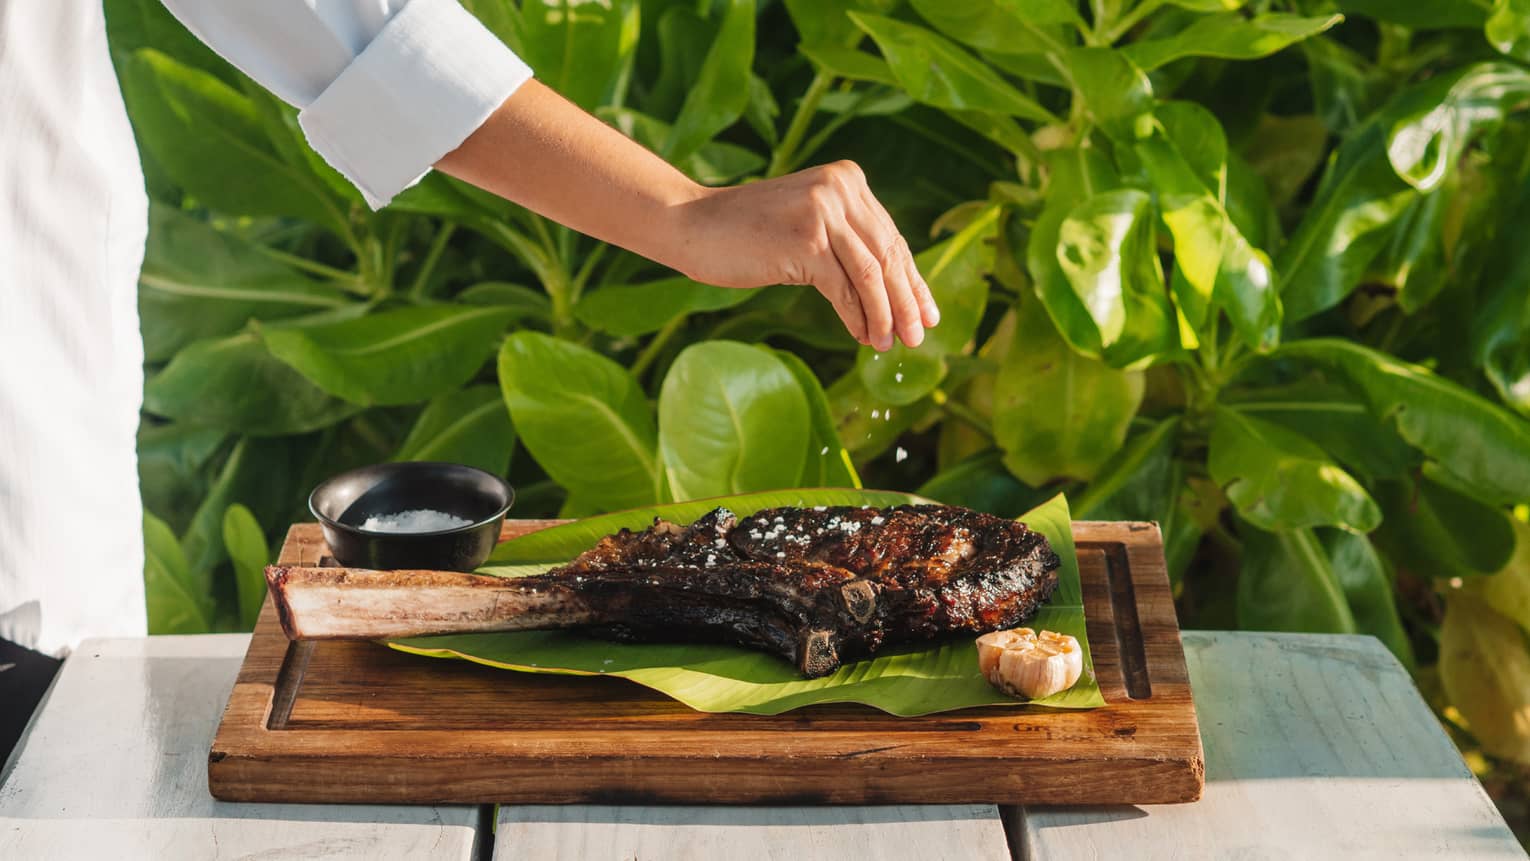 Chef sprinkling seasoning on a grilled tomahawk rib-eye steak on banana leaf